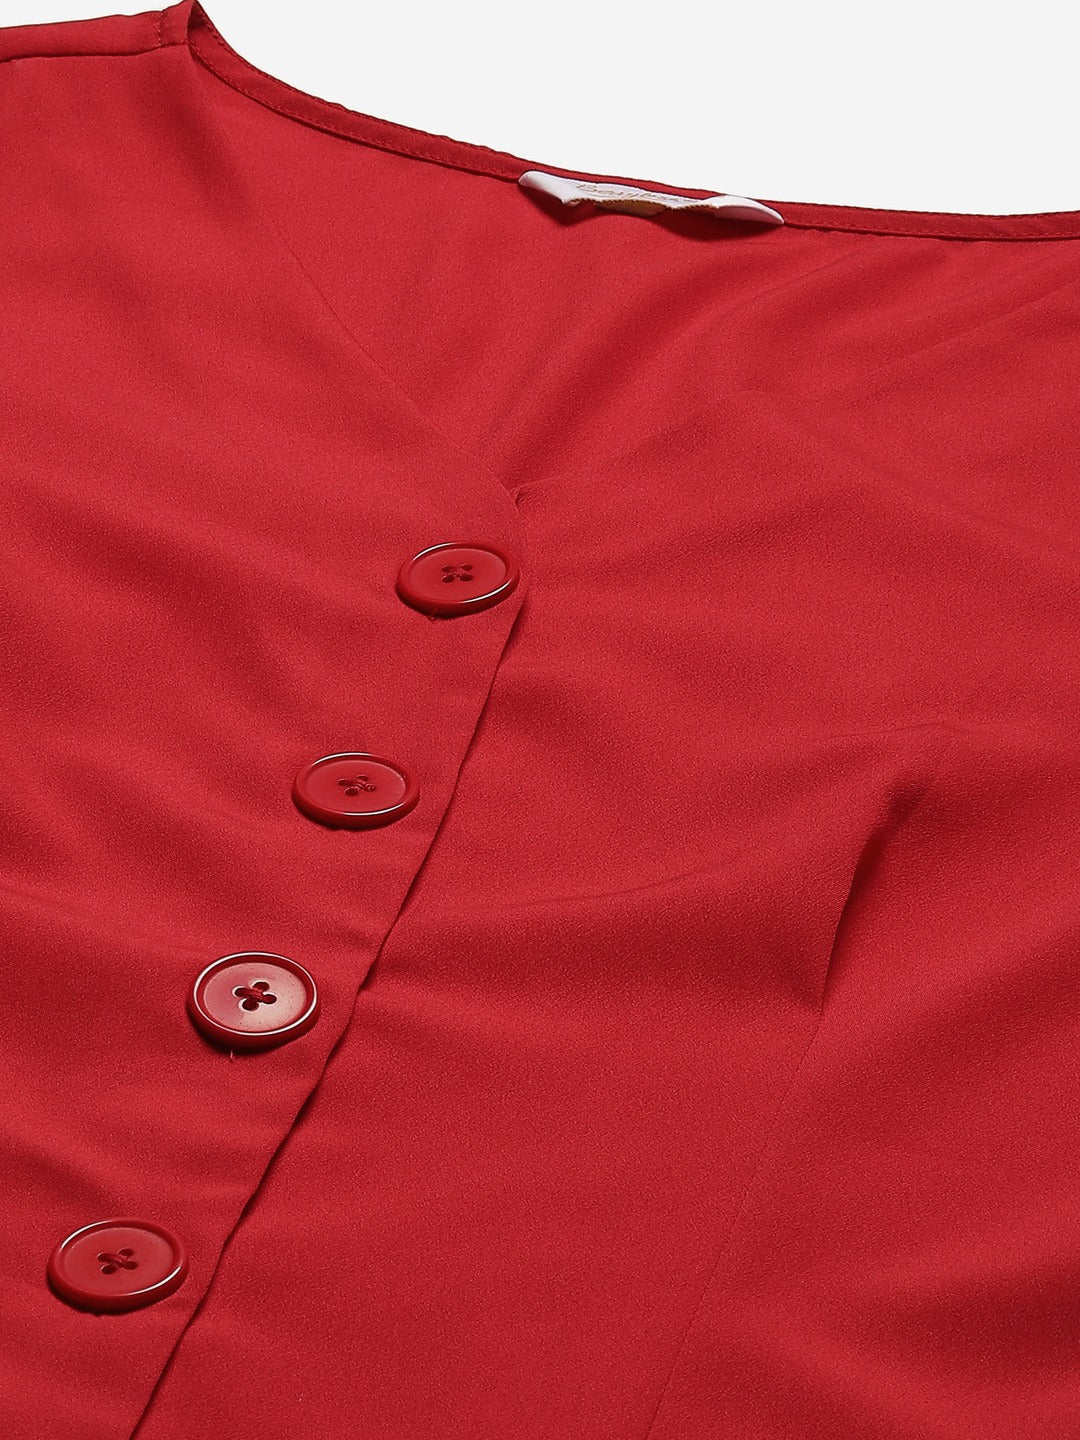 Folk Republic Women Solid Red V-Neck Front Button-Up Crepe Flared Mini Shirt Dress - #folk republic#